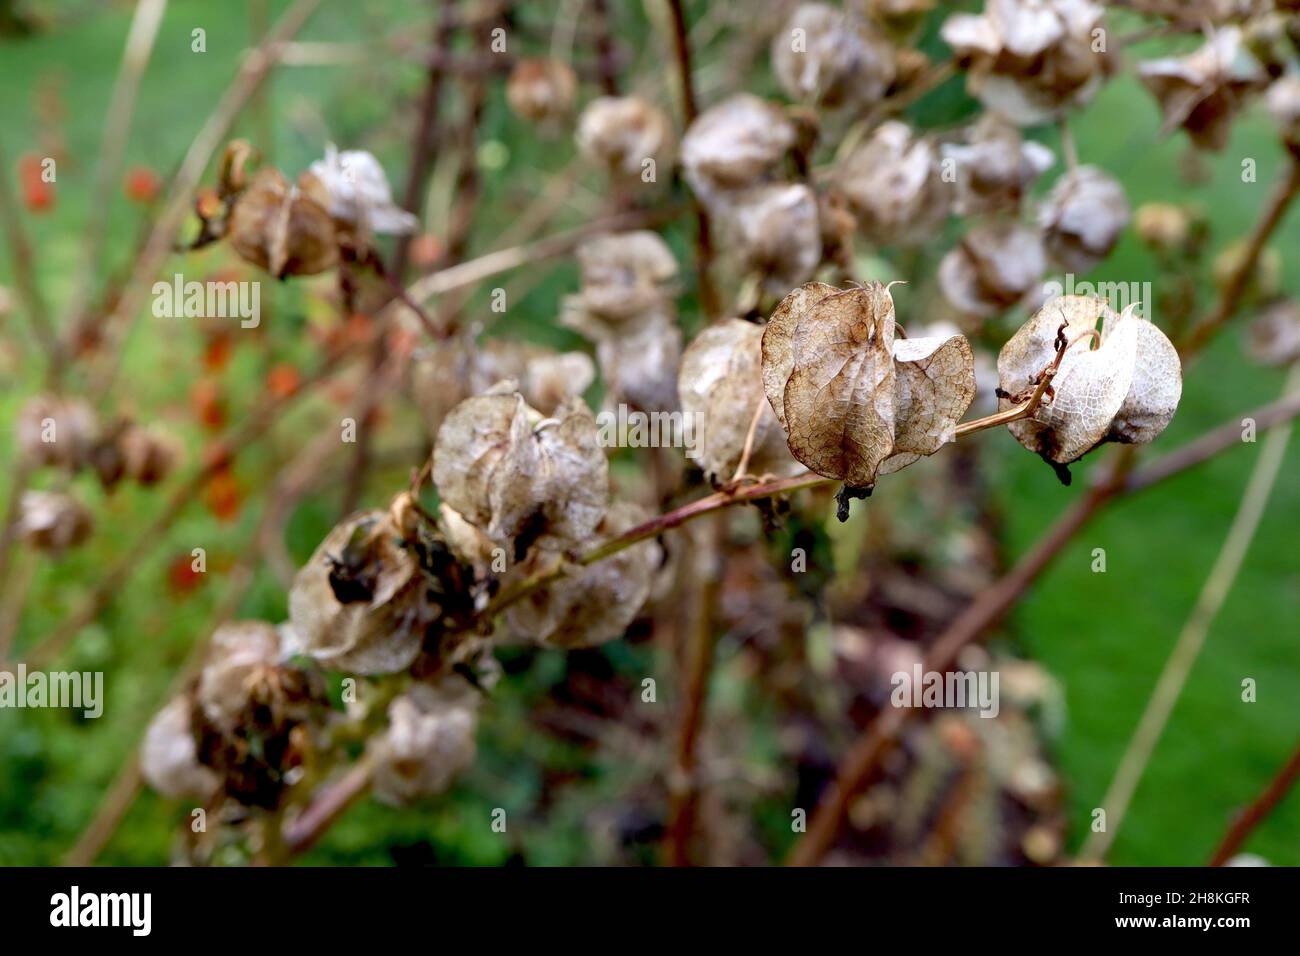 Nicandra physalodes shoo-fly plant – buff sharp-edged ridged spherical papery calyces,  November, England, UK Stock Photo